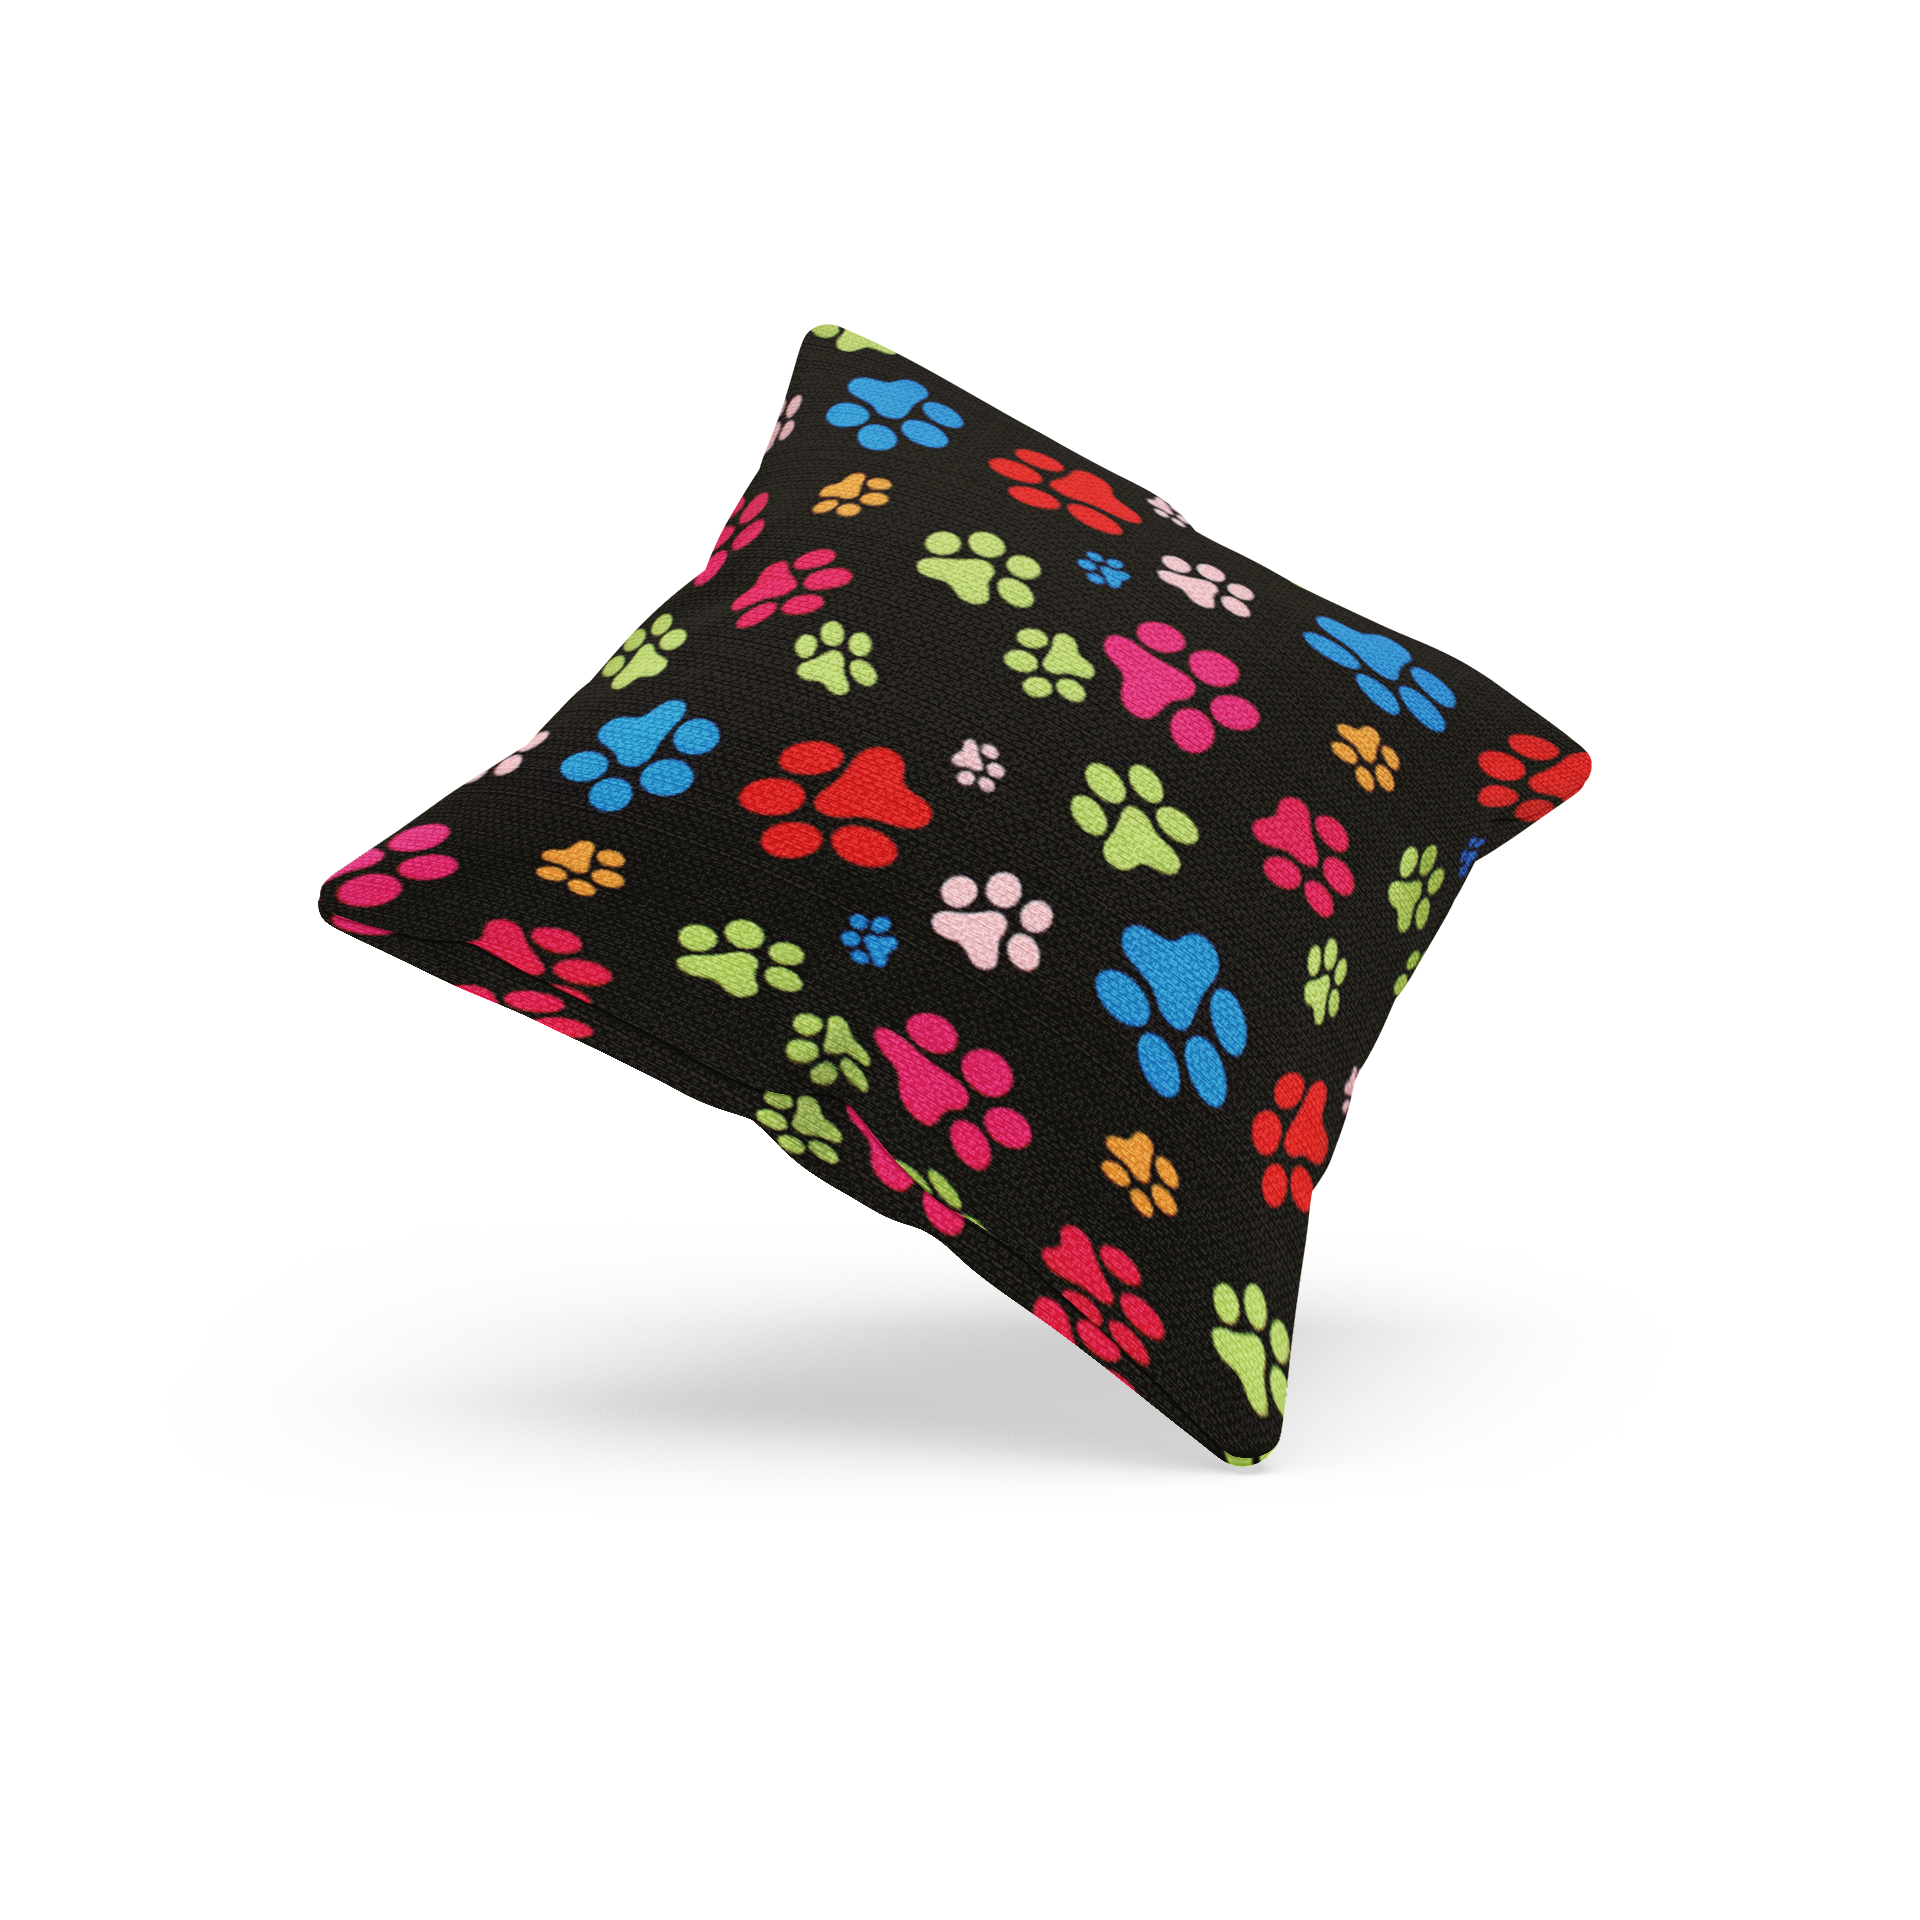 Colorful Paw Cushion Cover - PawLaLand